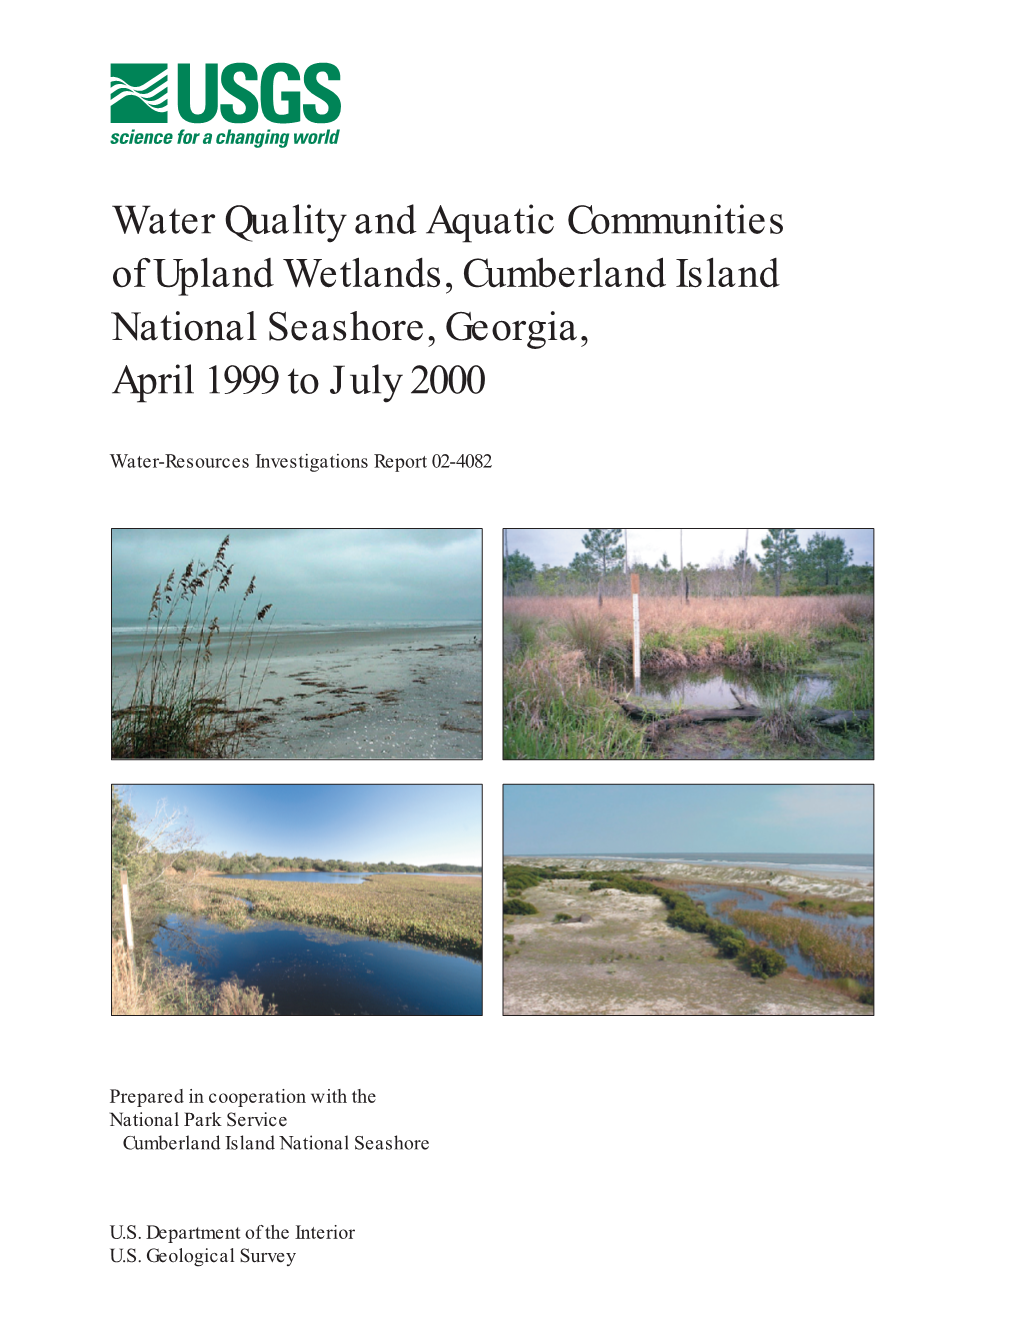 Water Quality and Aquatic Communities of Upland Wetlands, Cumberland Island National Seashore, Georgia, April 1999 to July 2000